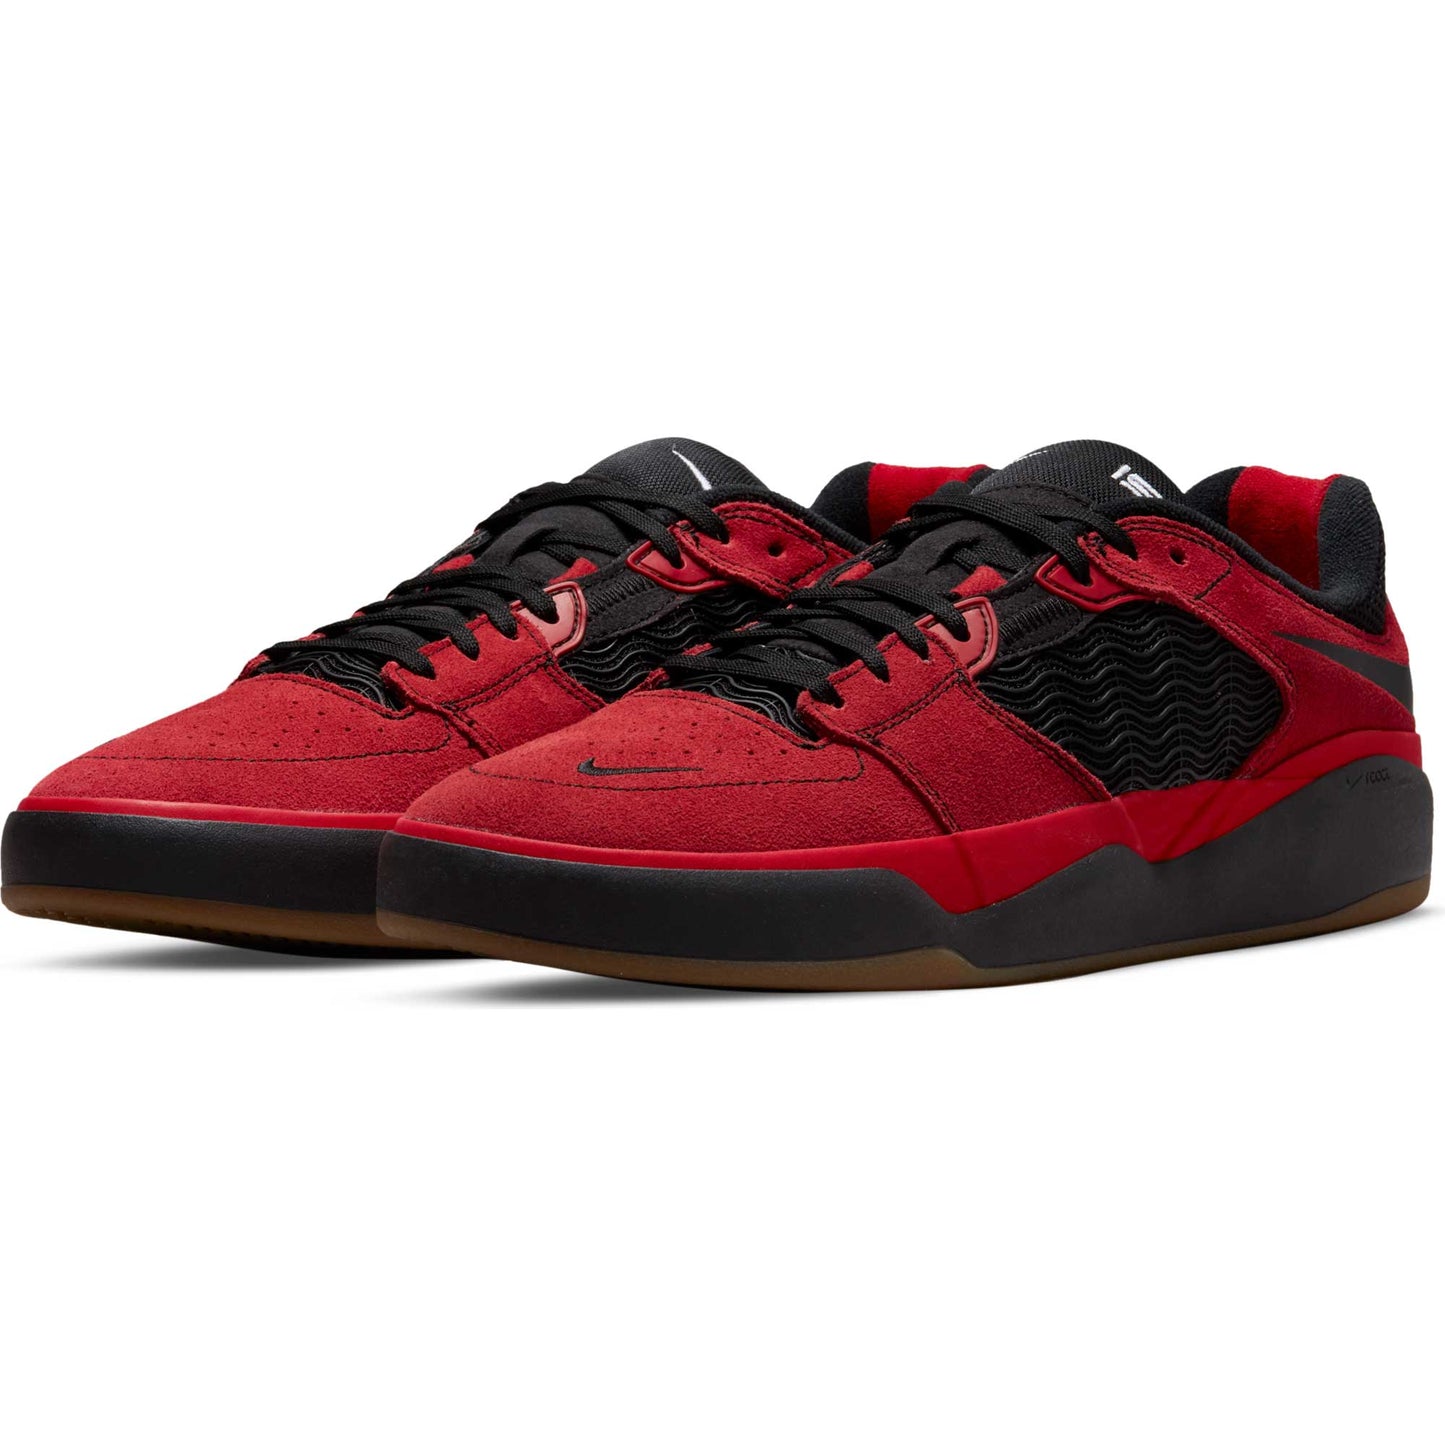 Nike SB Ishod Wair, varsity red/black-varsity red-white - Tiki Room Skateboards - 2